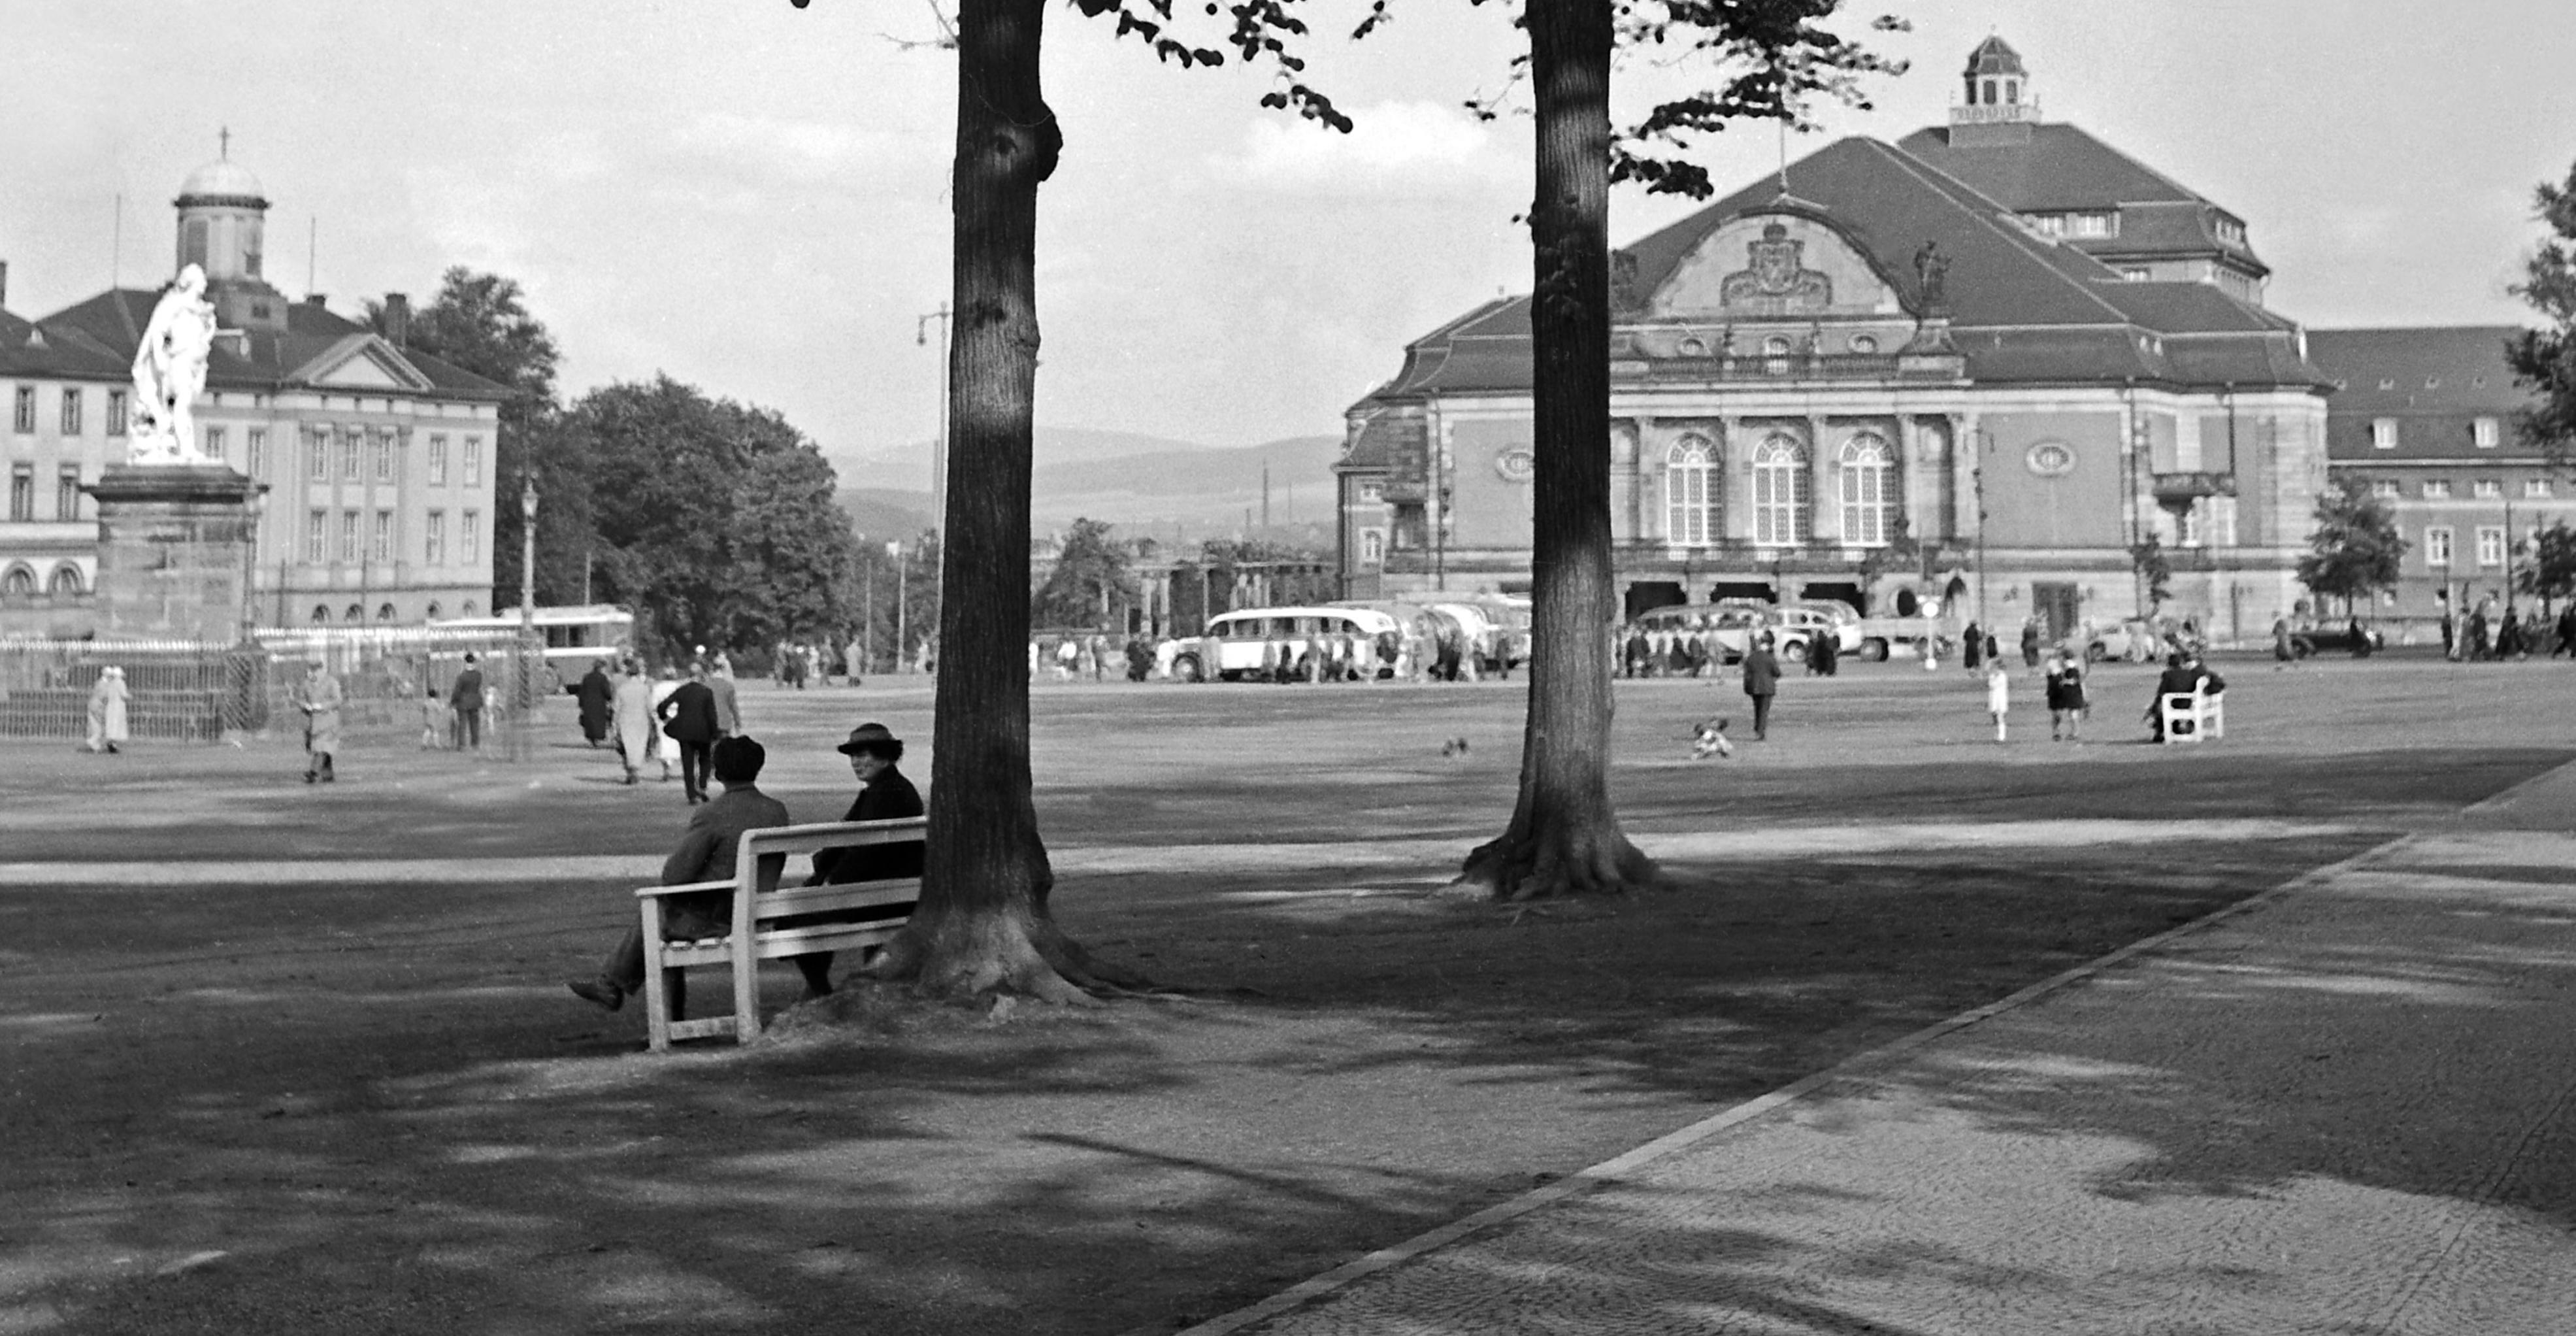 Friedrichsplatz square at the inner city of Kassel, Germany 1937 Printed Later - Photograph by Karl Heinrich Lämmel